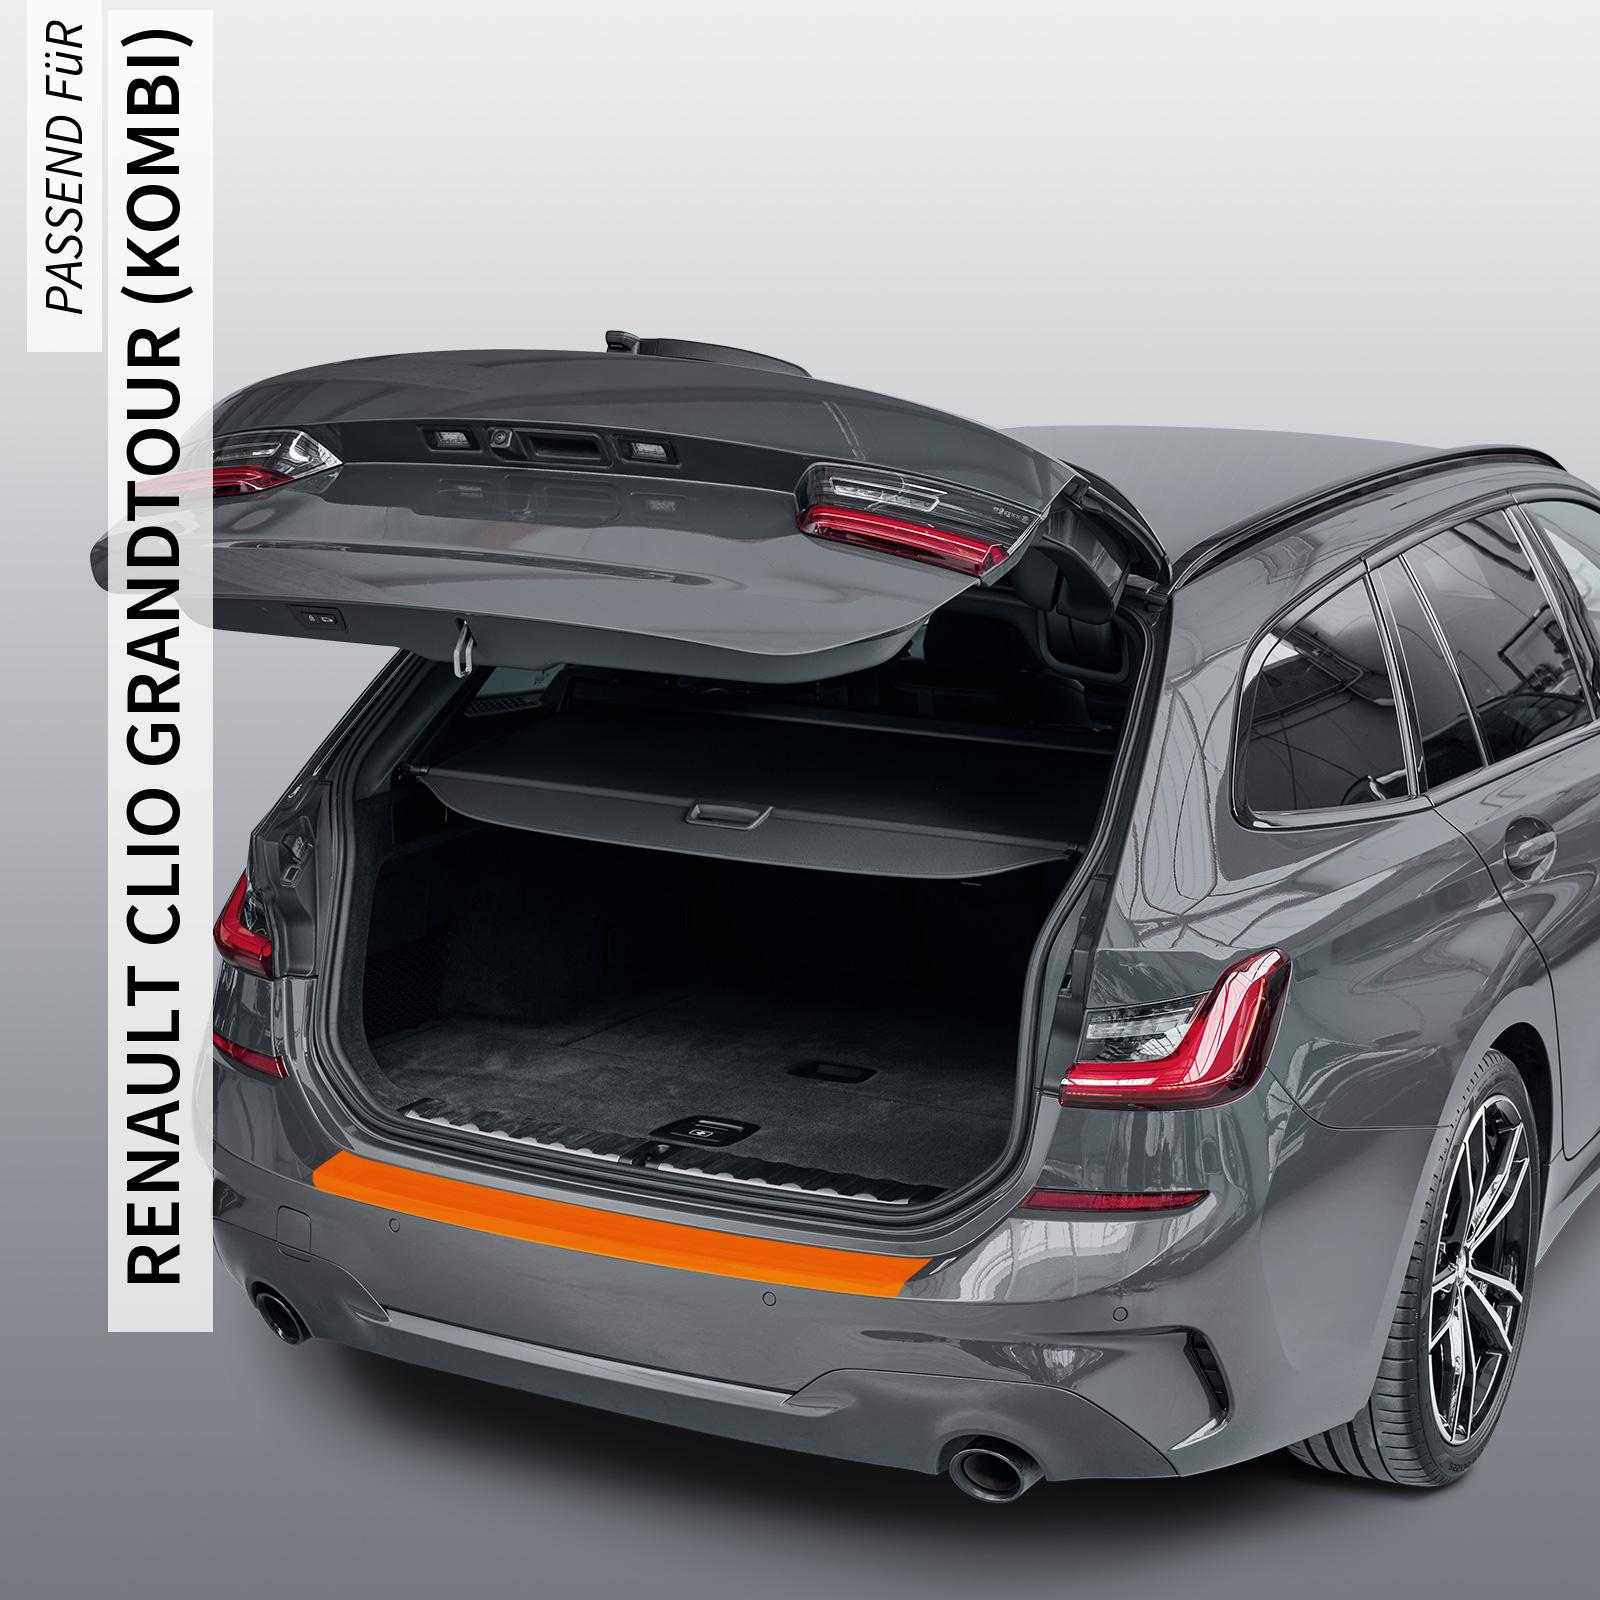 Ladekantenschutzfolie - Transparent Glatt MATT 110 µm stark  für Renault Clio Grandtour (Kombi) (III) Typ R, BJ 2009-2012